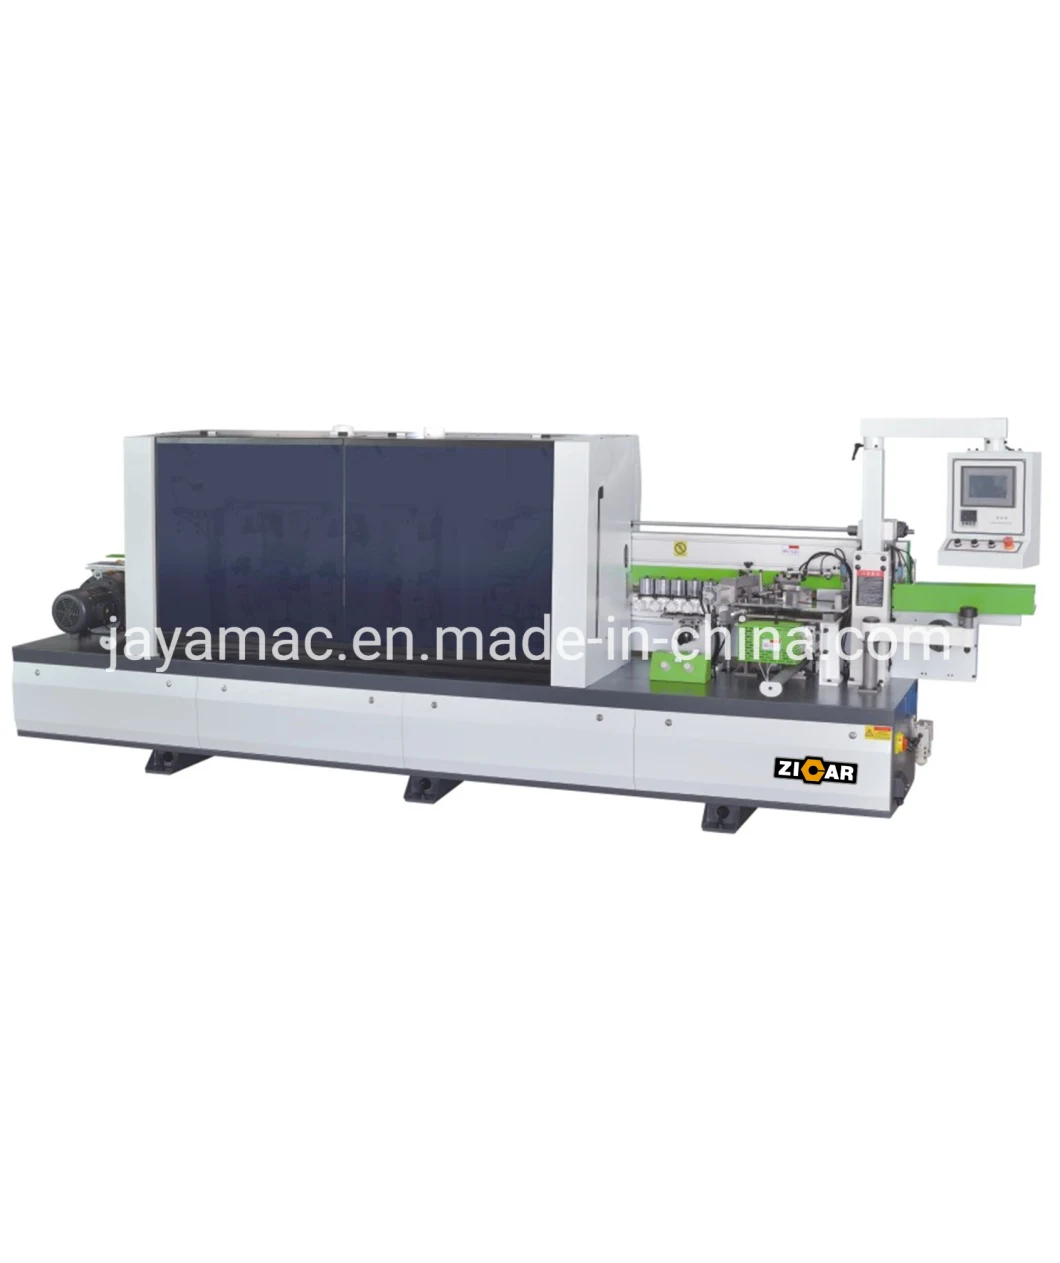 zicar wood based panels PVC round edge banding machine machinery Plastic Manual Edge Bander MF50B